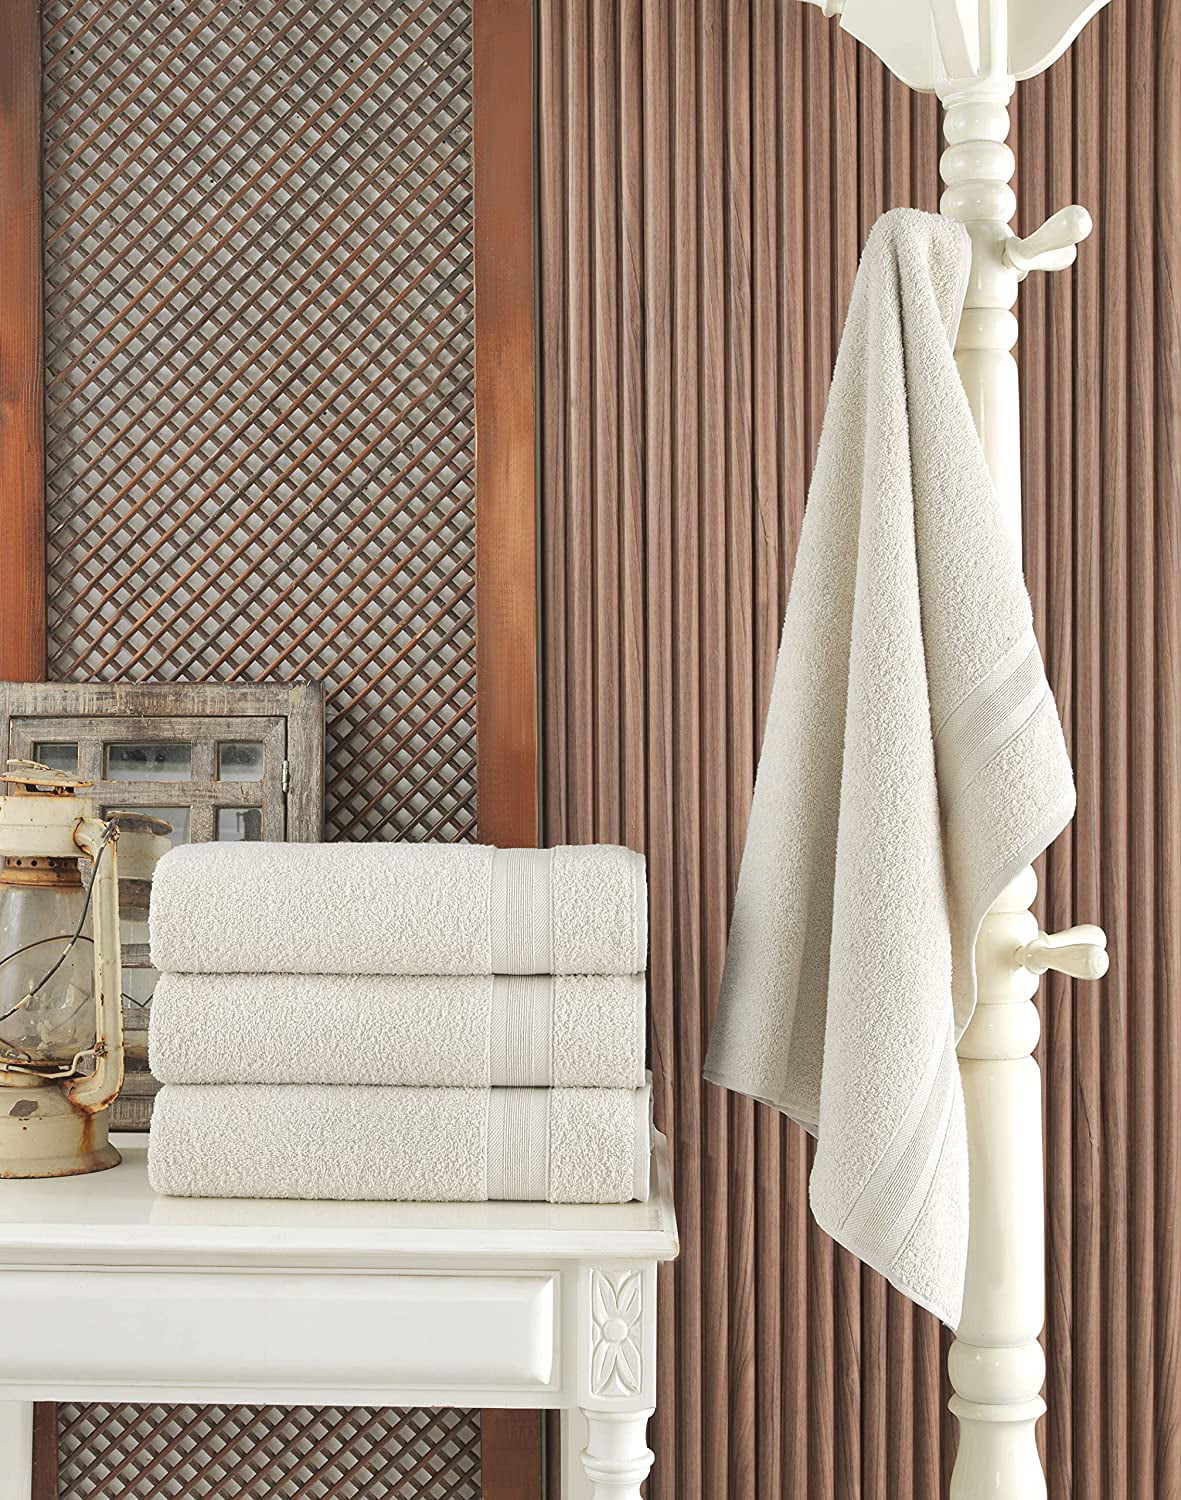 Cotton Paradise Bath Towels, 100% Turkish Cotton 27x54 inch 4 Piece Bath  Towel Sets for Bathroom, Soft Absorbent Towels Clearance Bathroom Set, Aqua